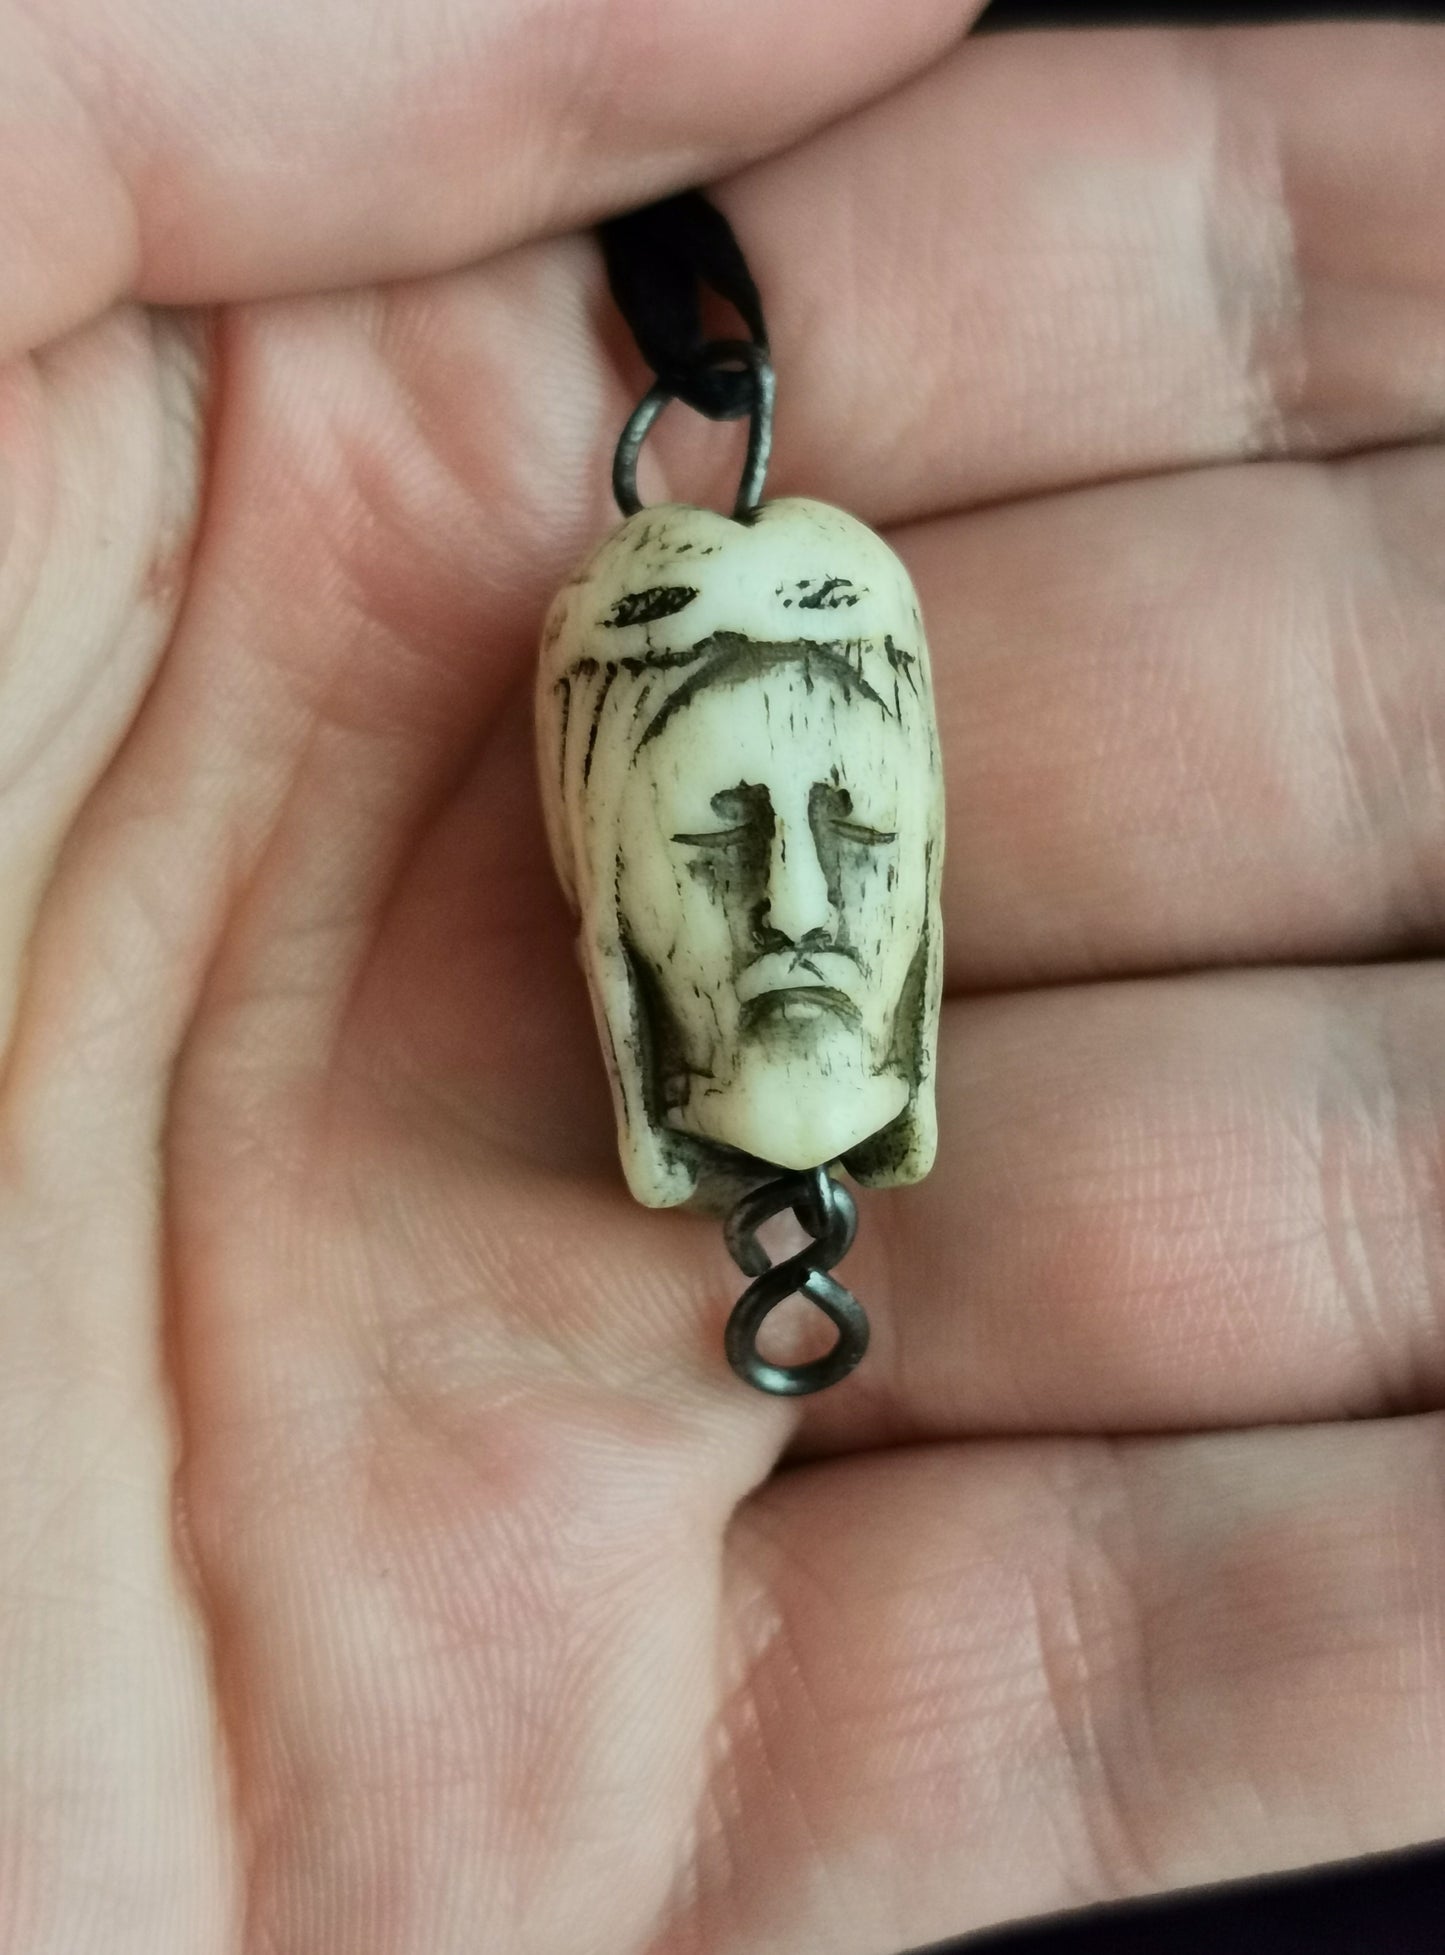 Rare Georgian Memento Mori pendant, Skull and Jesus, 18th century